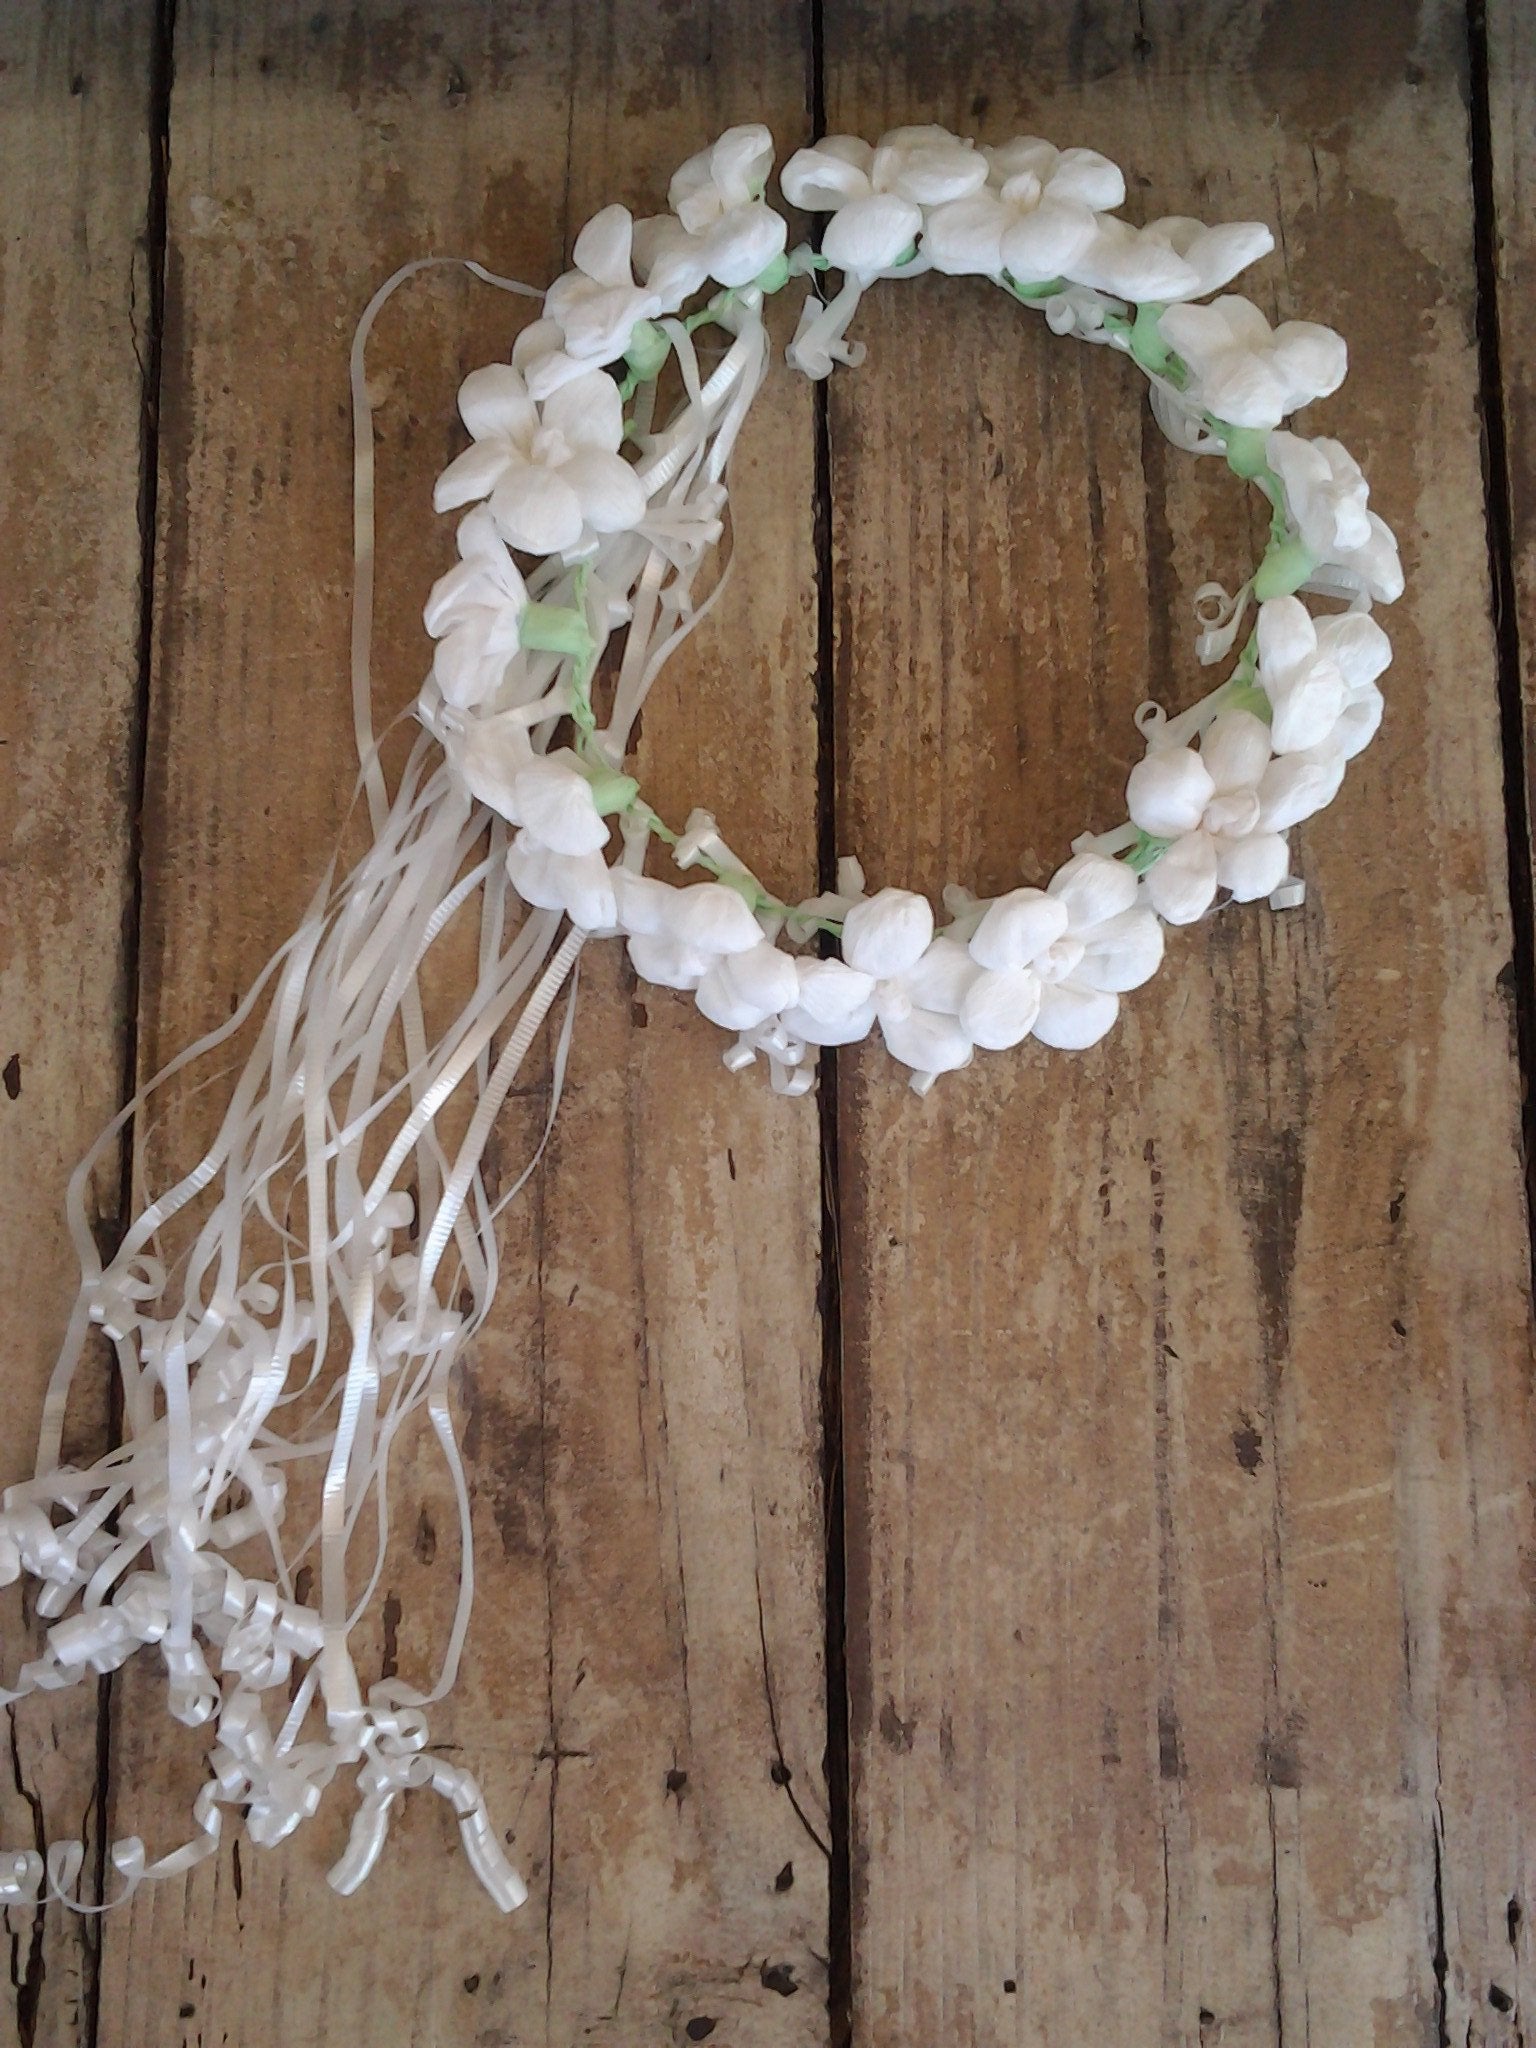 White Flowers DIY Flower Crown Kit